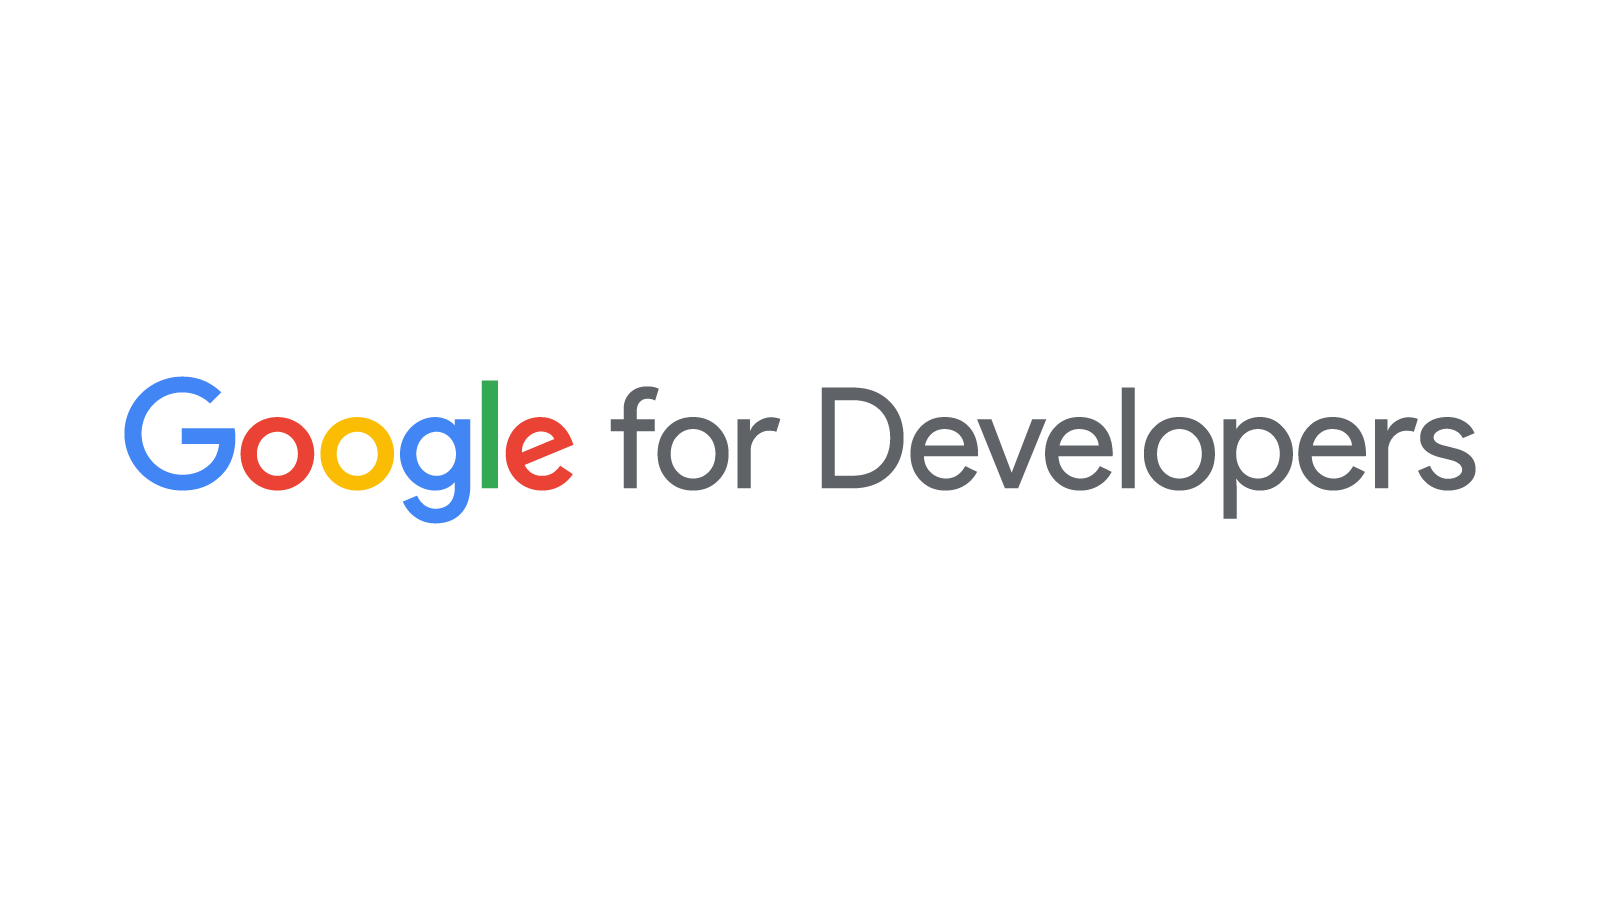 Introducing the Google Developer Program: Unlock New Opportunities